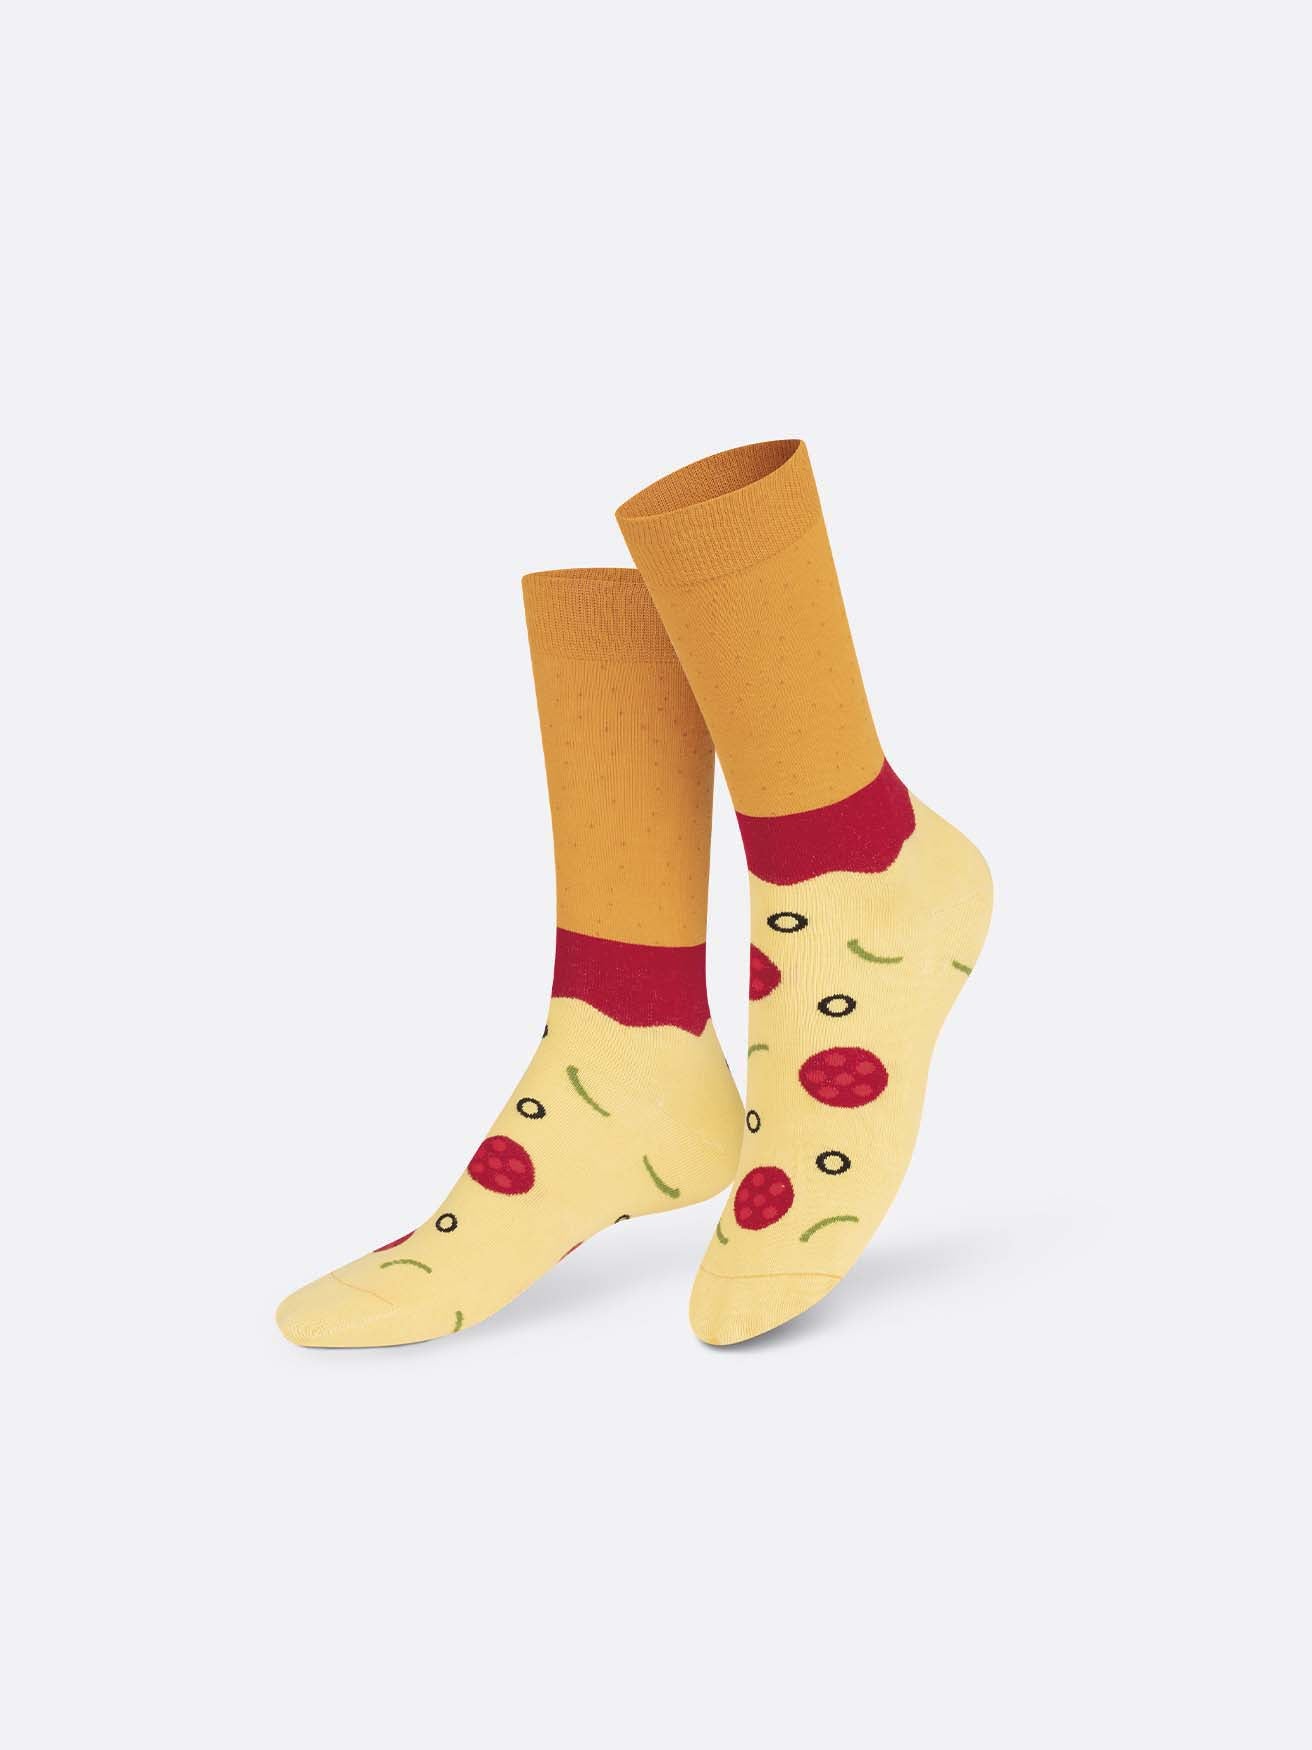 Eat My Socks: Napoli Pizza